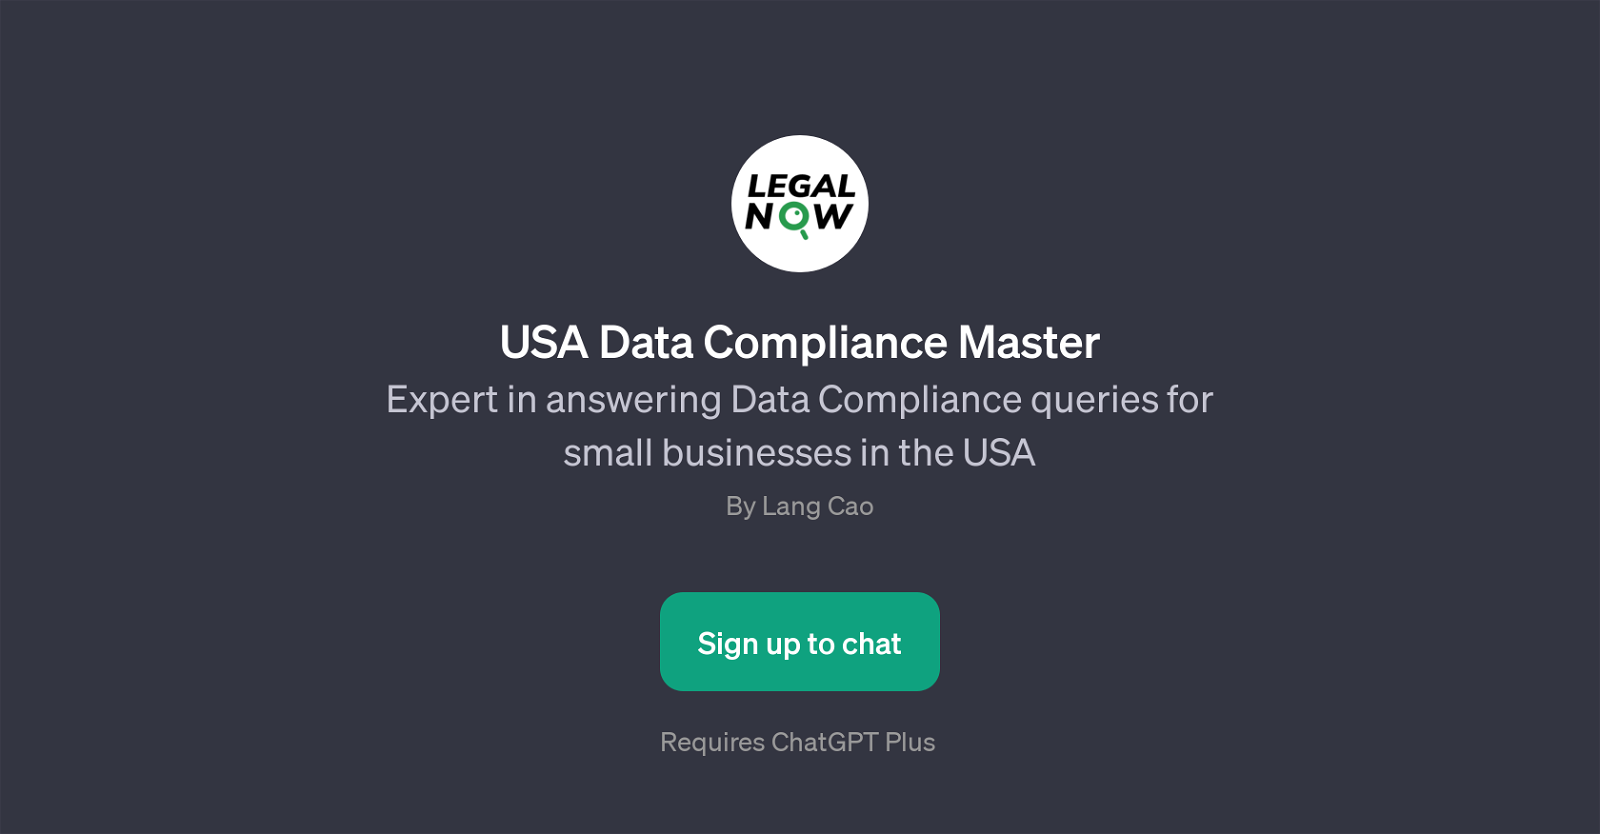 USA Data Compliance Master website